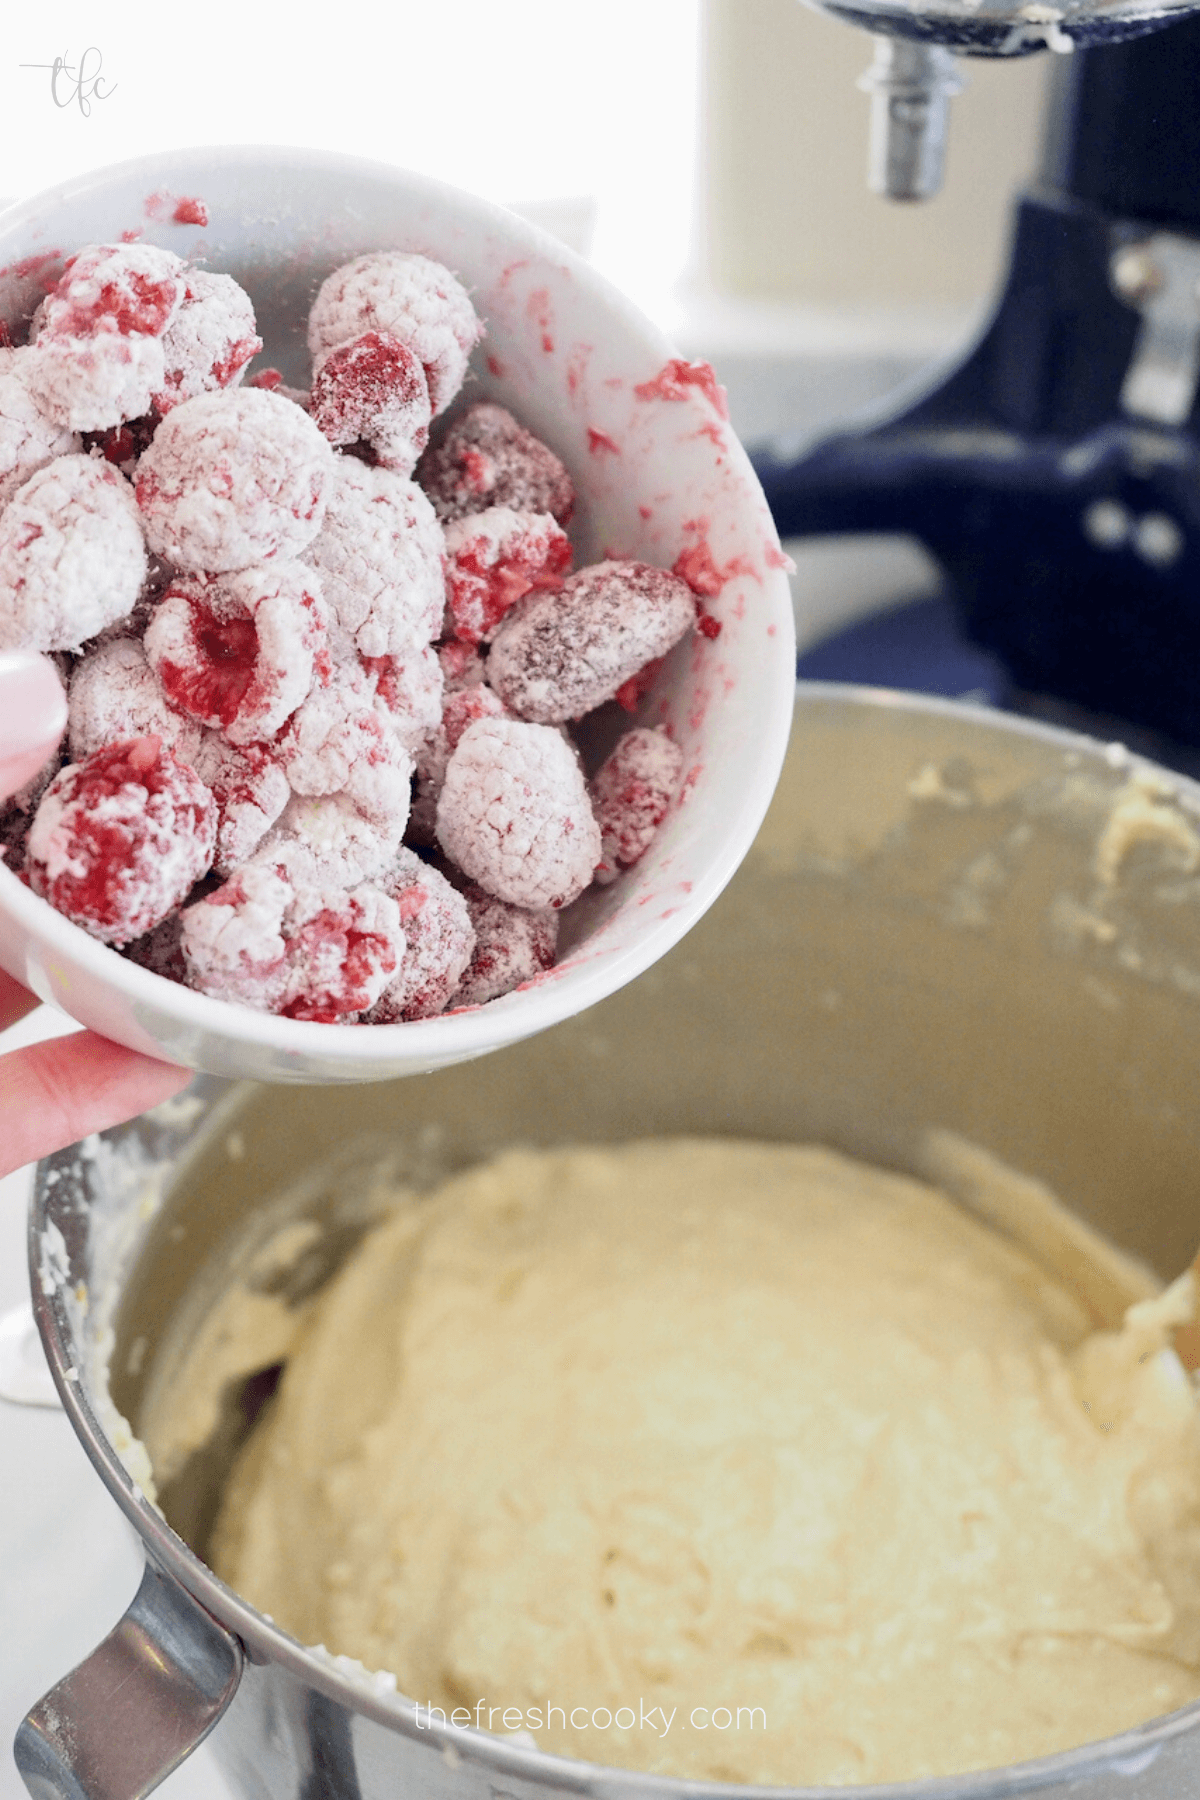 Add flour coated raspberries to cake batter. 